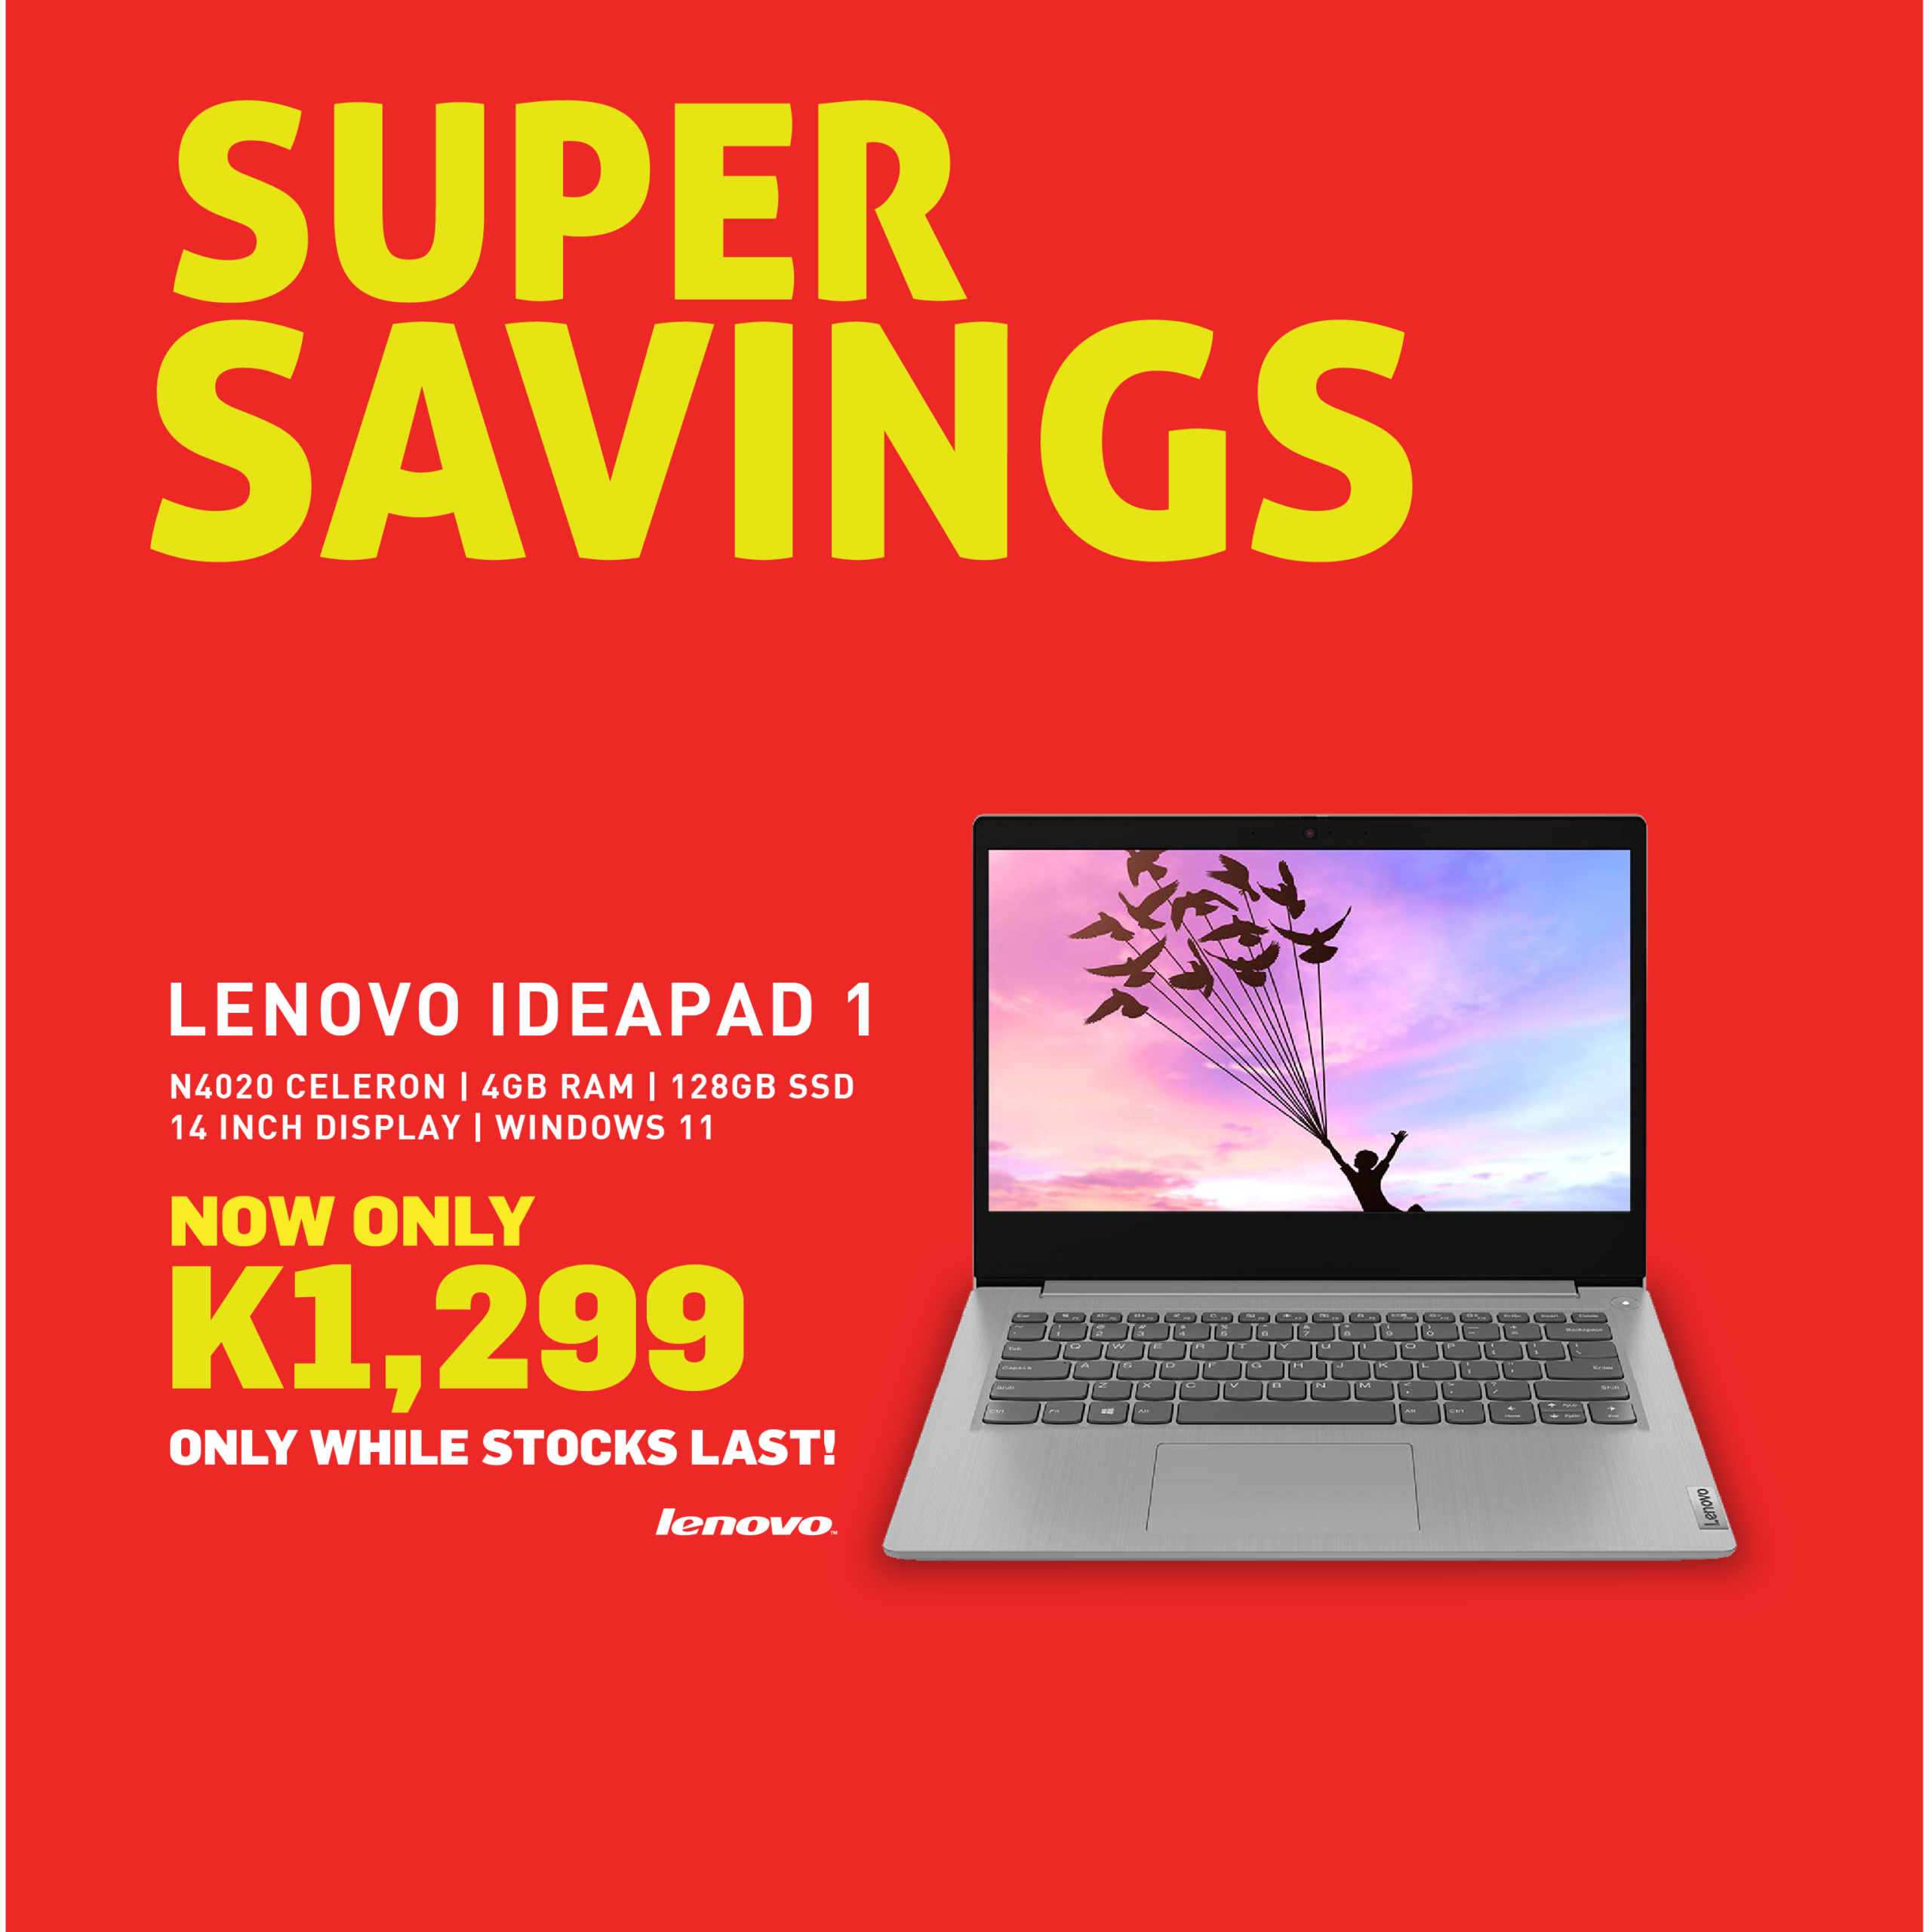 July_Super Savings_Lenovo Ideapad1 and Dell Optiplex_Web Posters-01